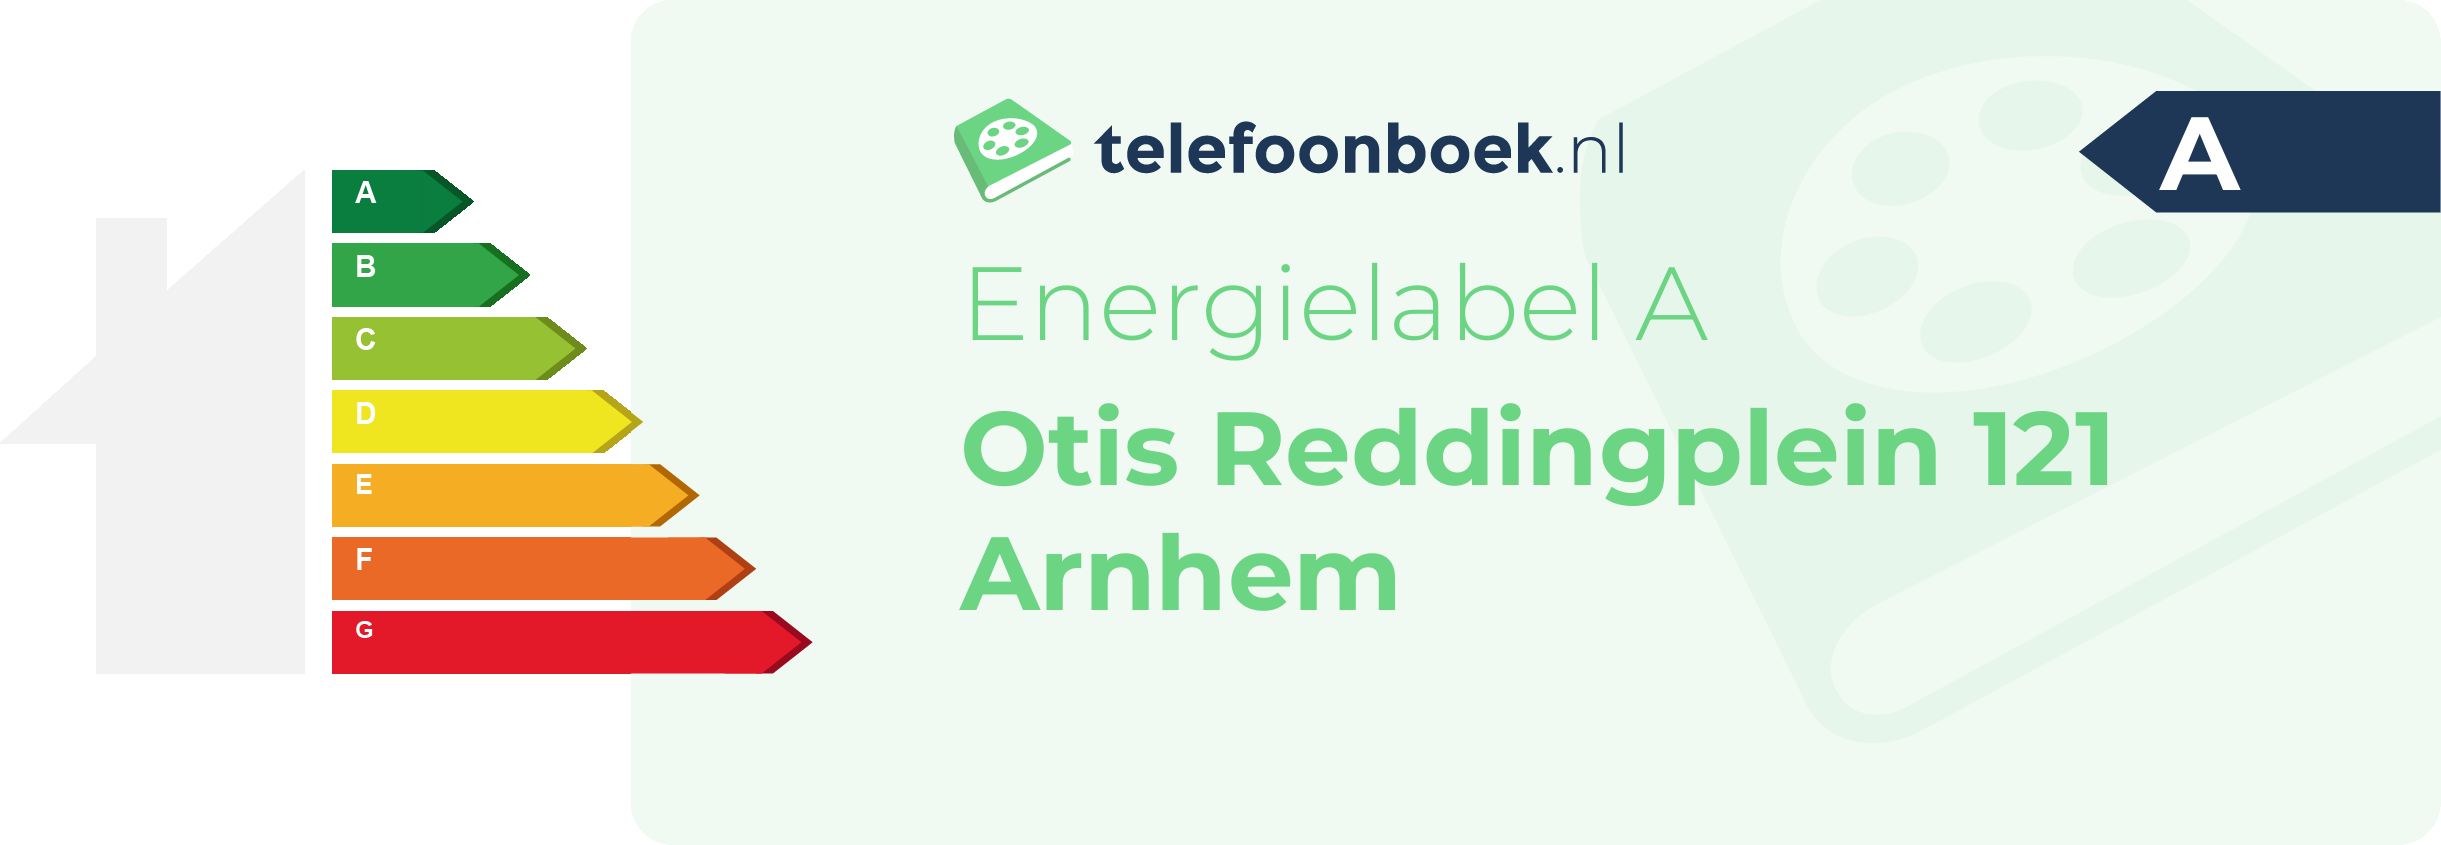 Energielabel Otis Reddingplein 121 Arnhem